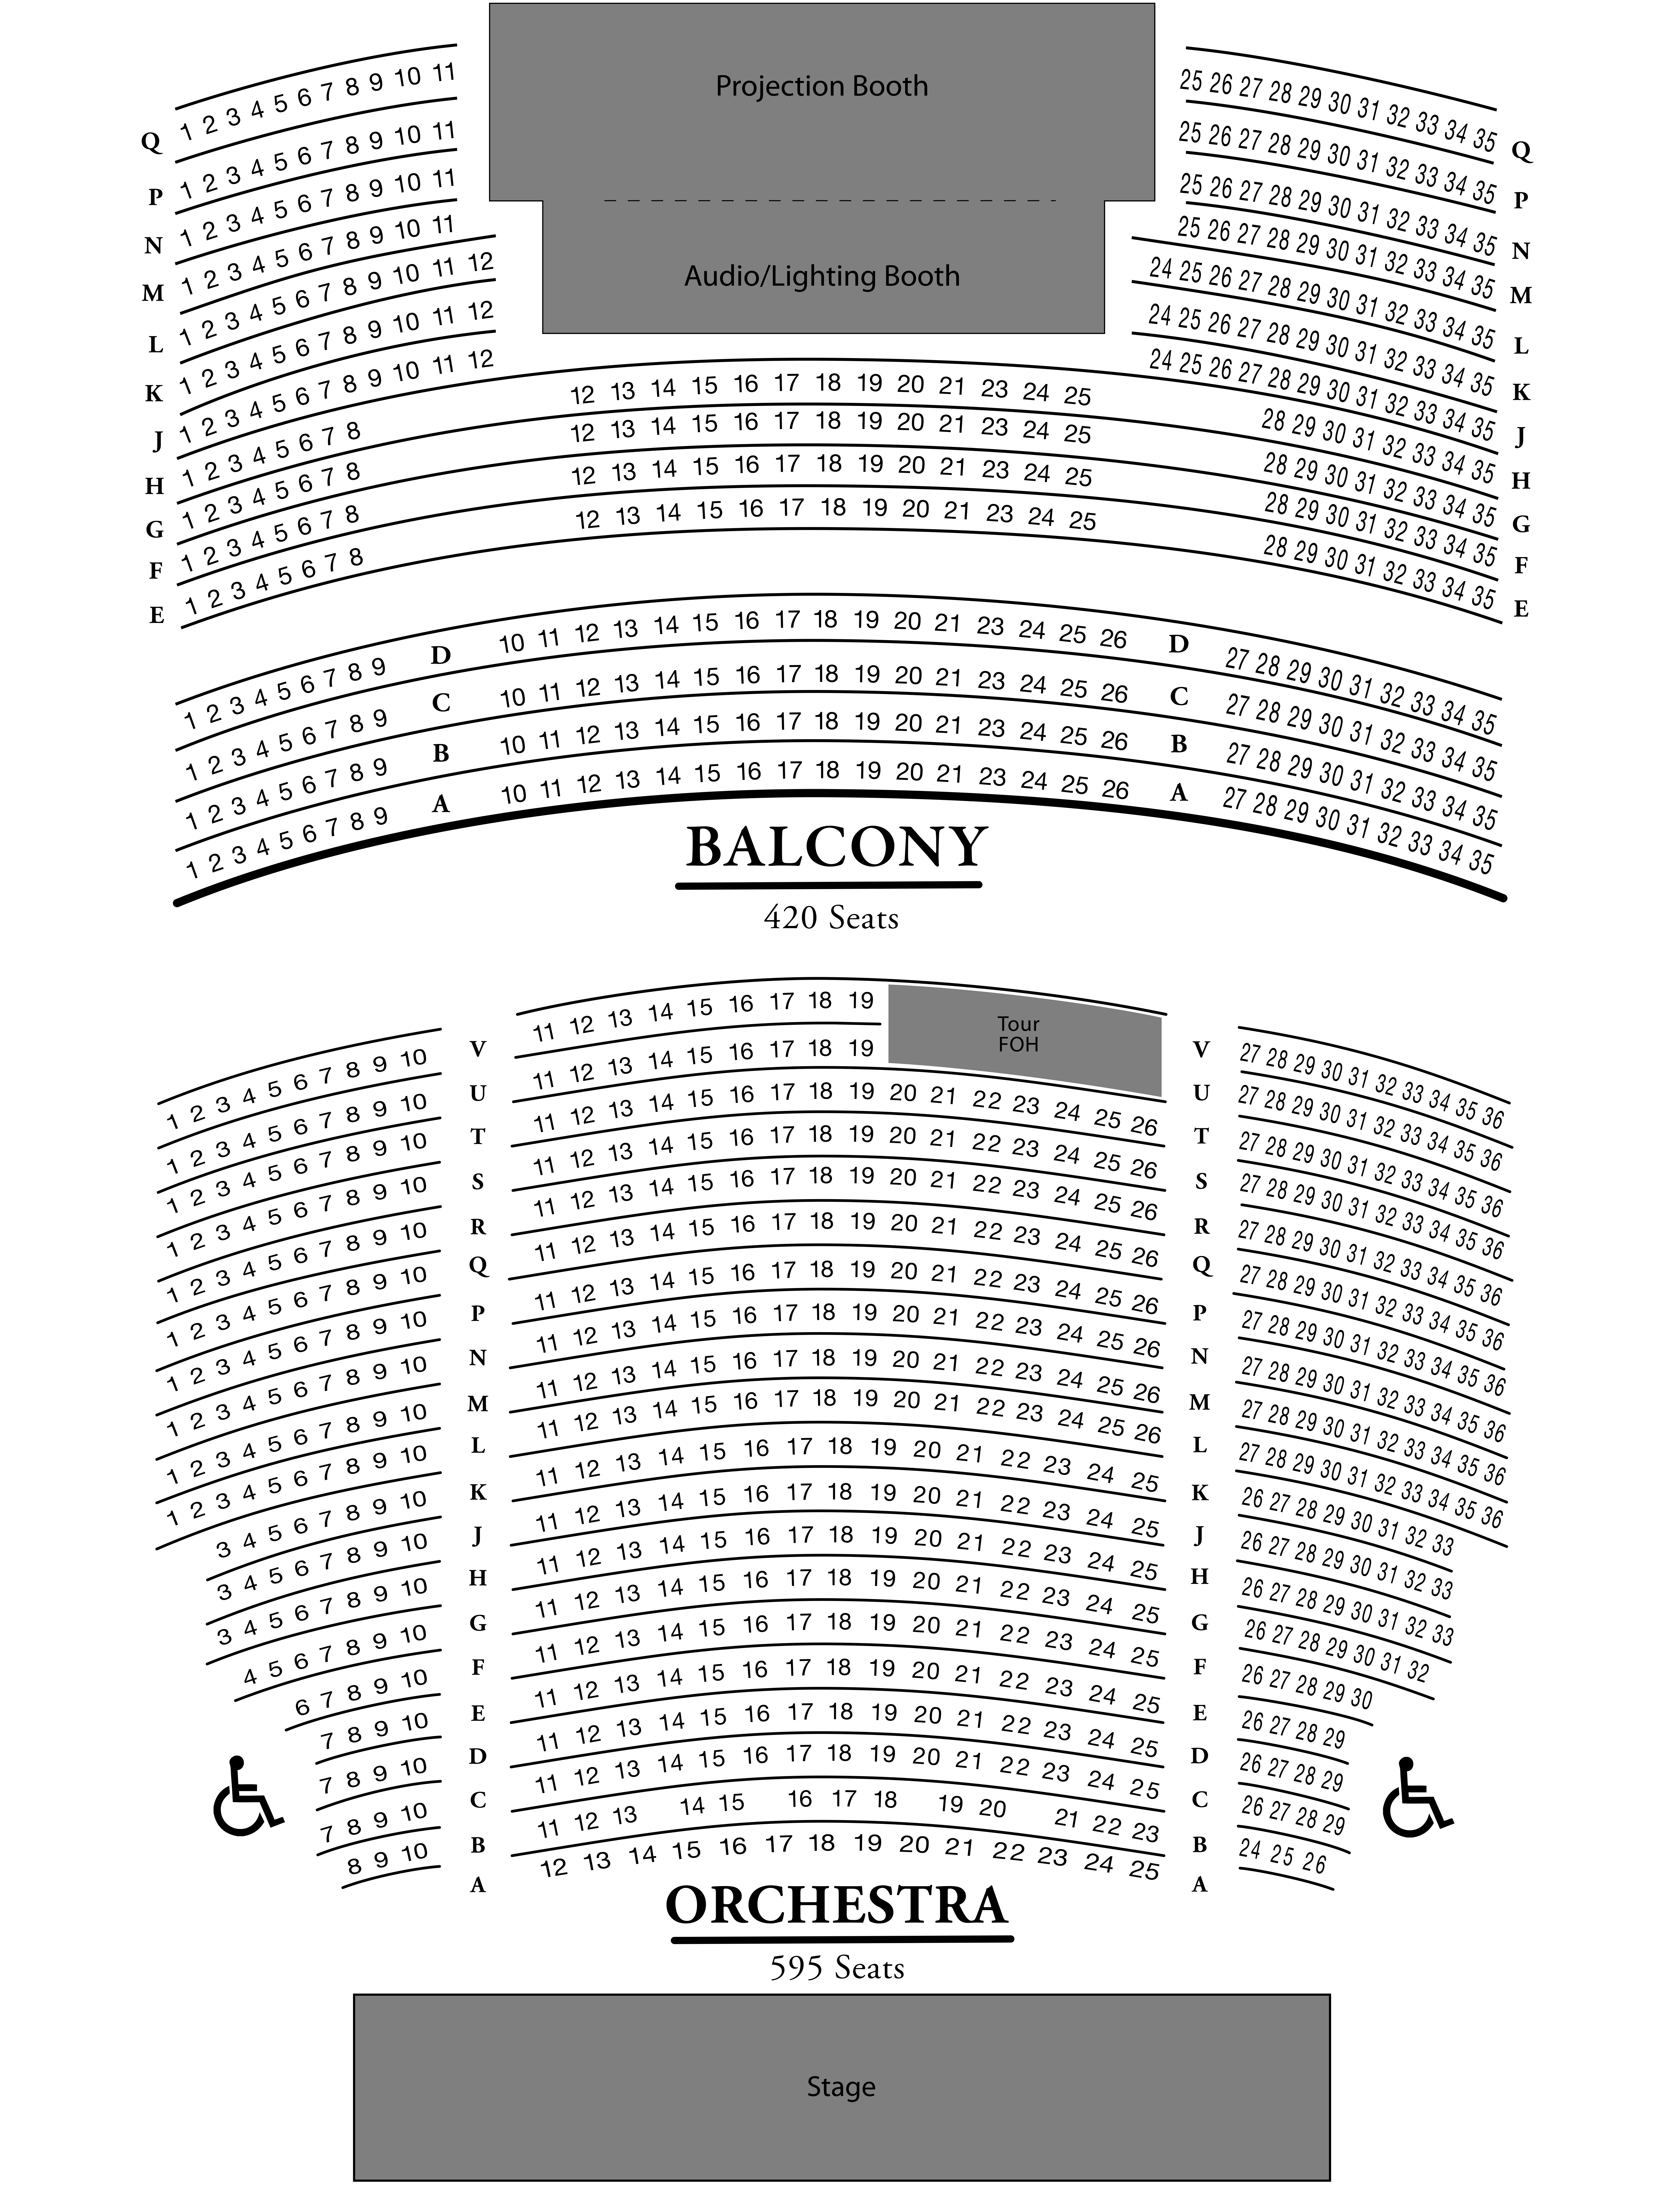 Jim Stafford Theater Seating Chart